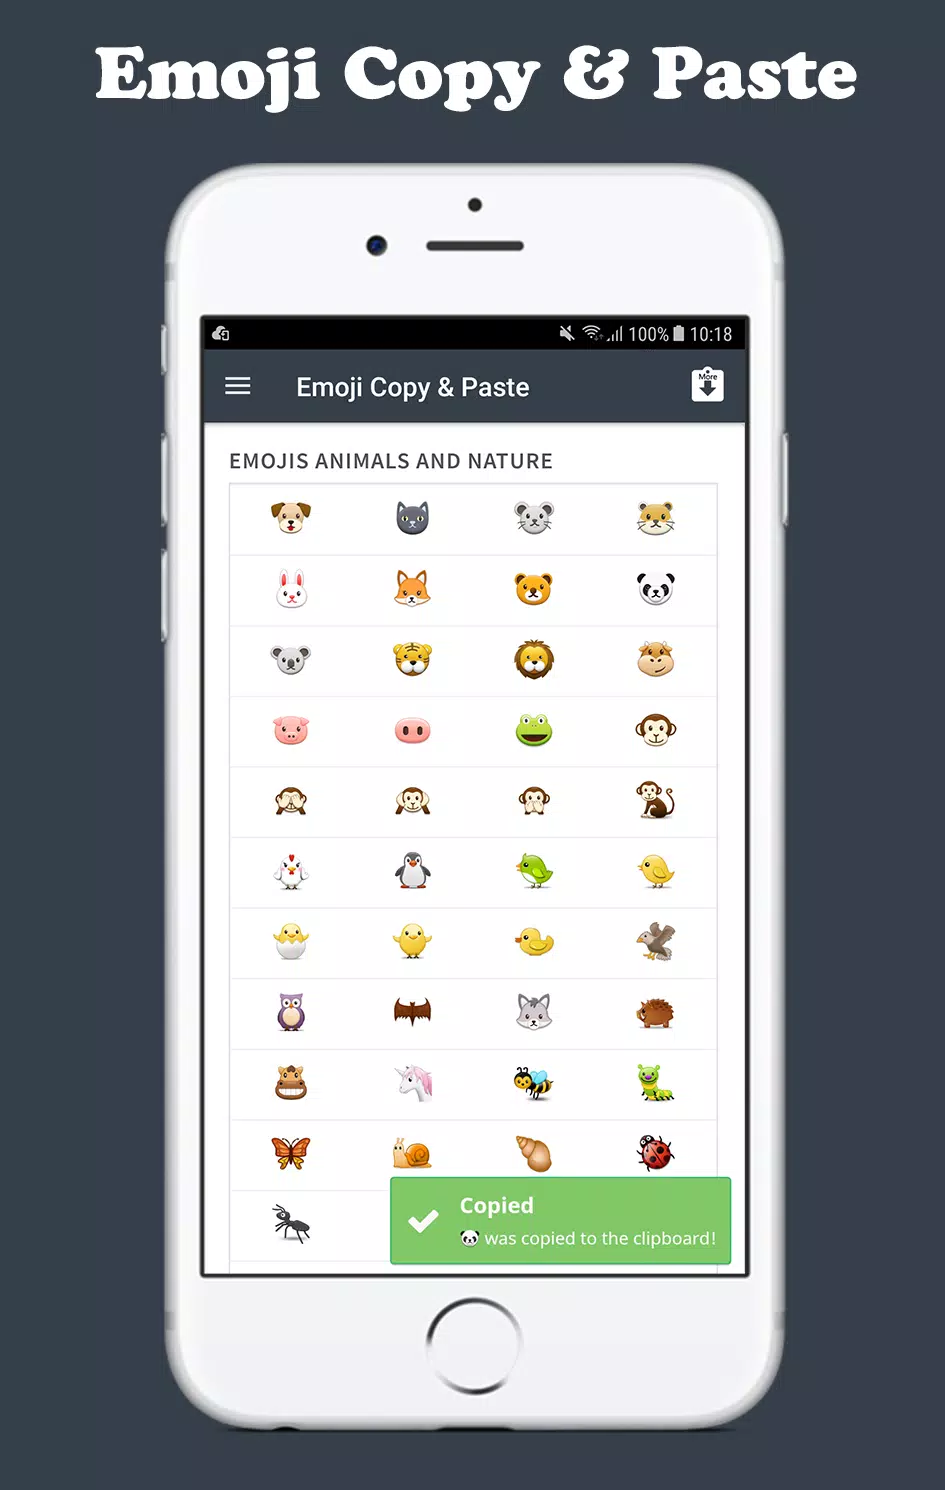 CopyChar – Copy emoji characters to your clipboard